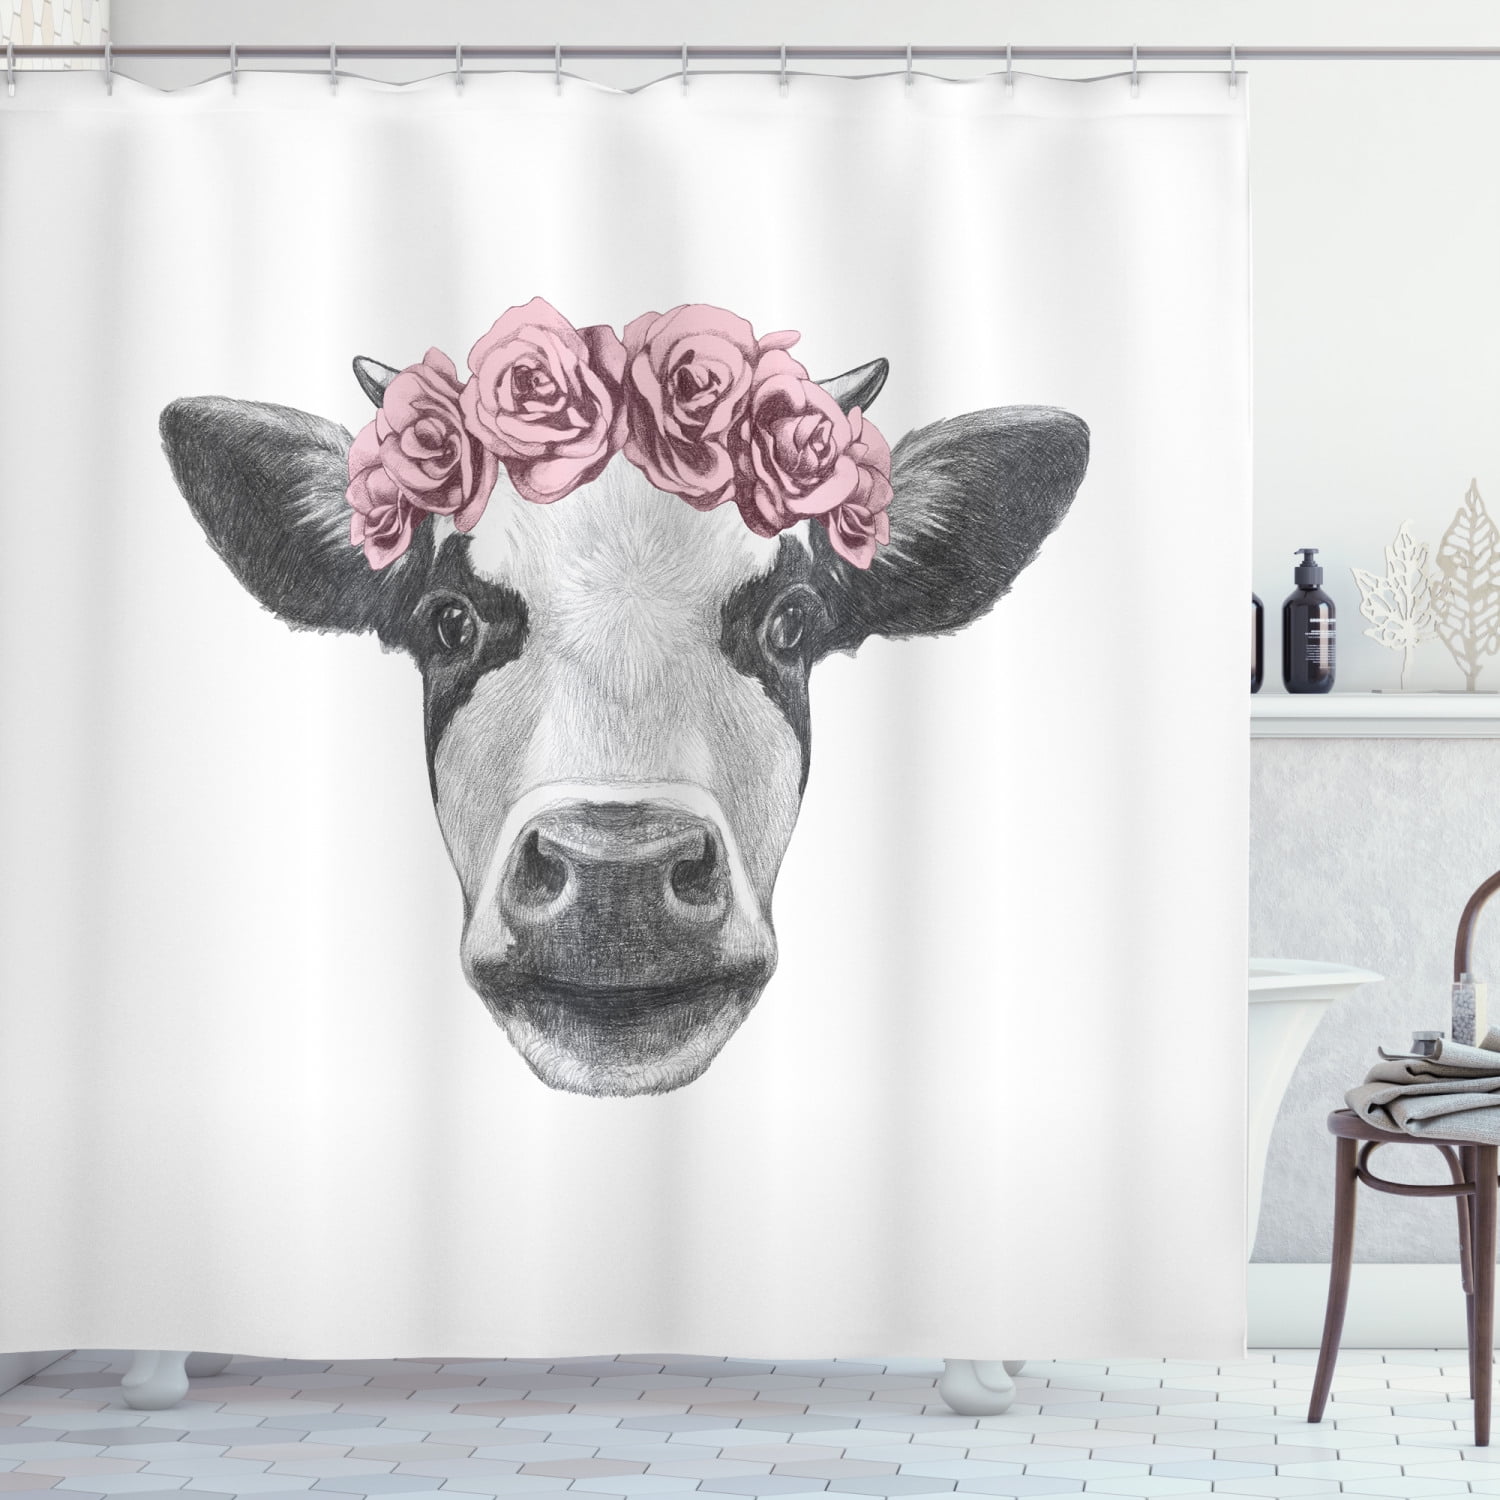 Red Truck and Farm Cow Shower Curtain Bathroom Decor Fabric & 12hooks 